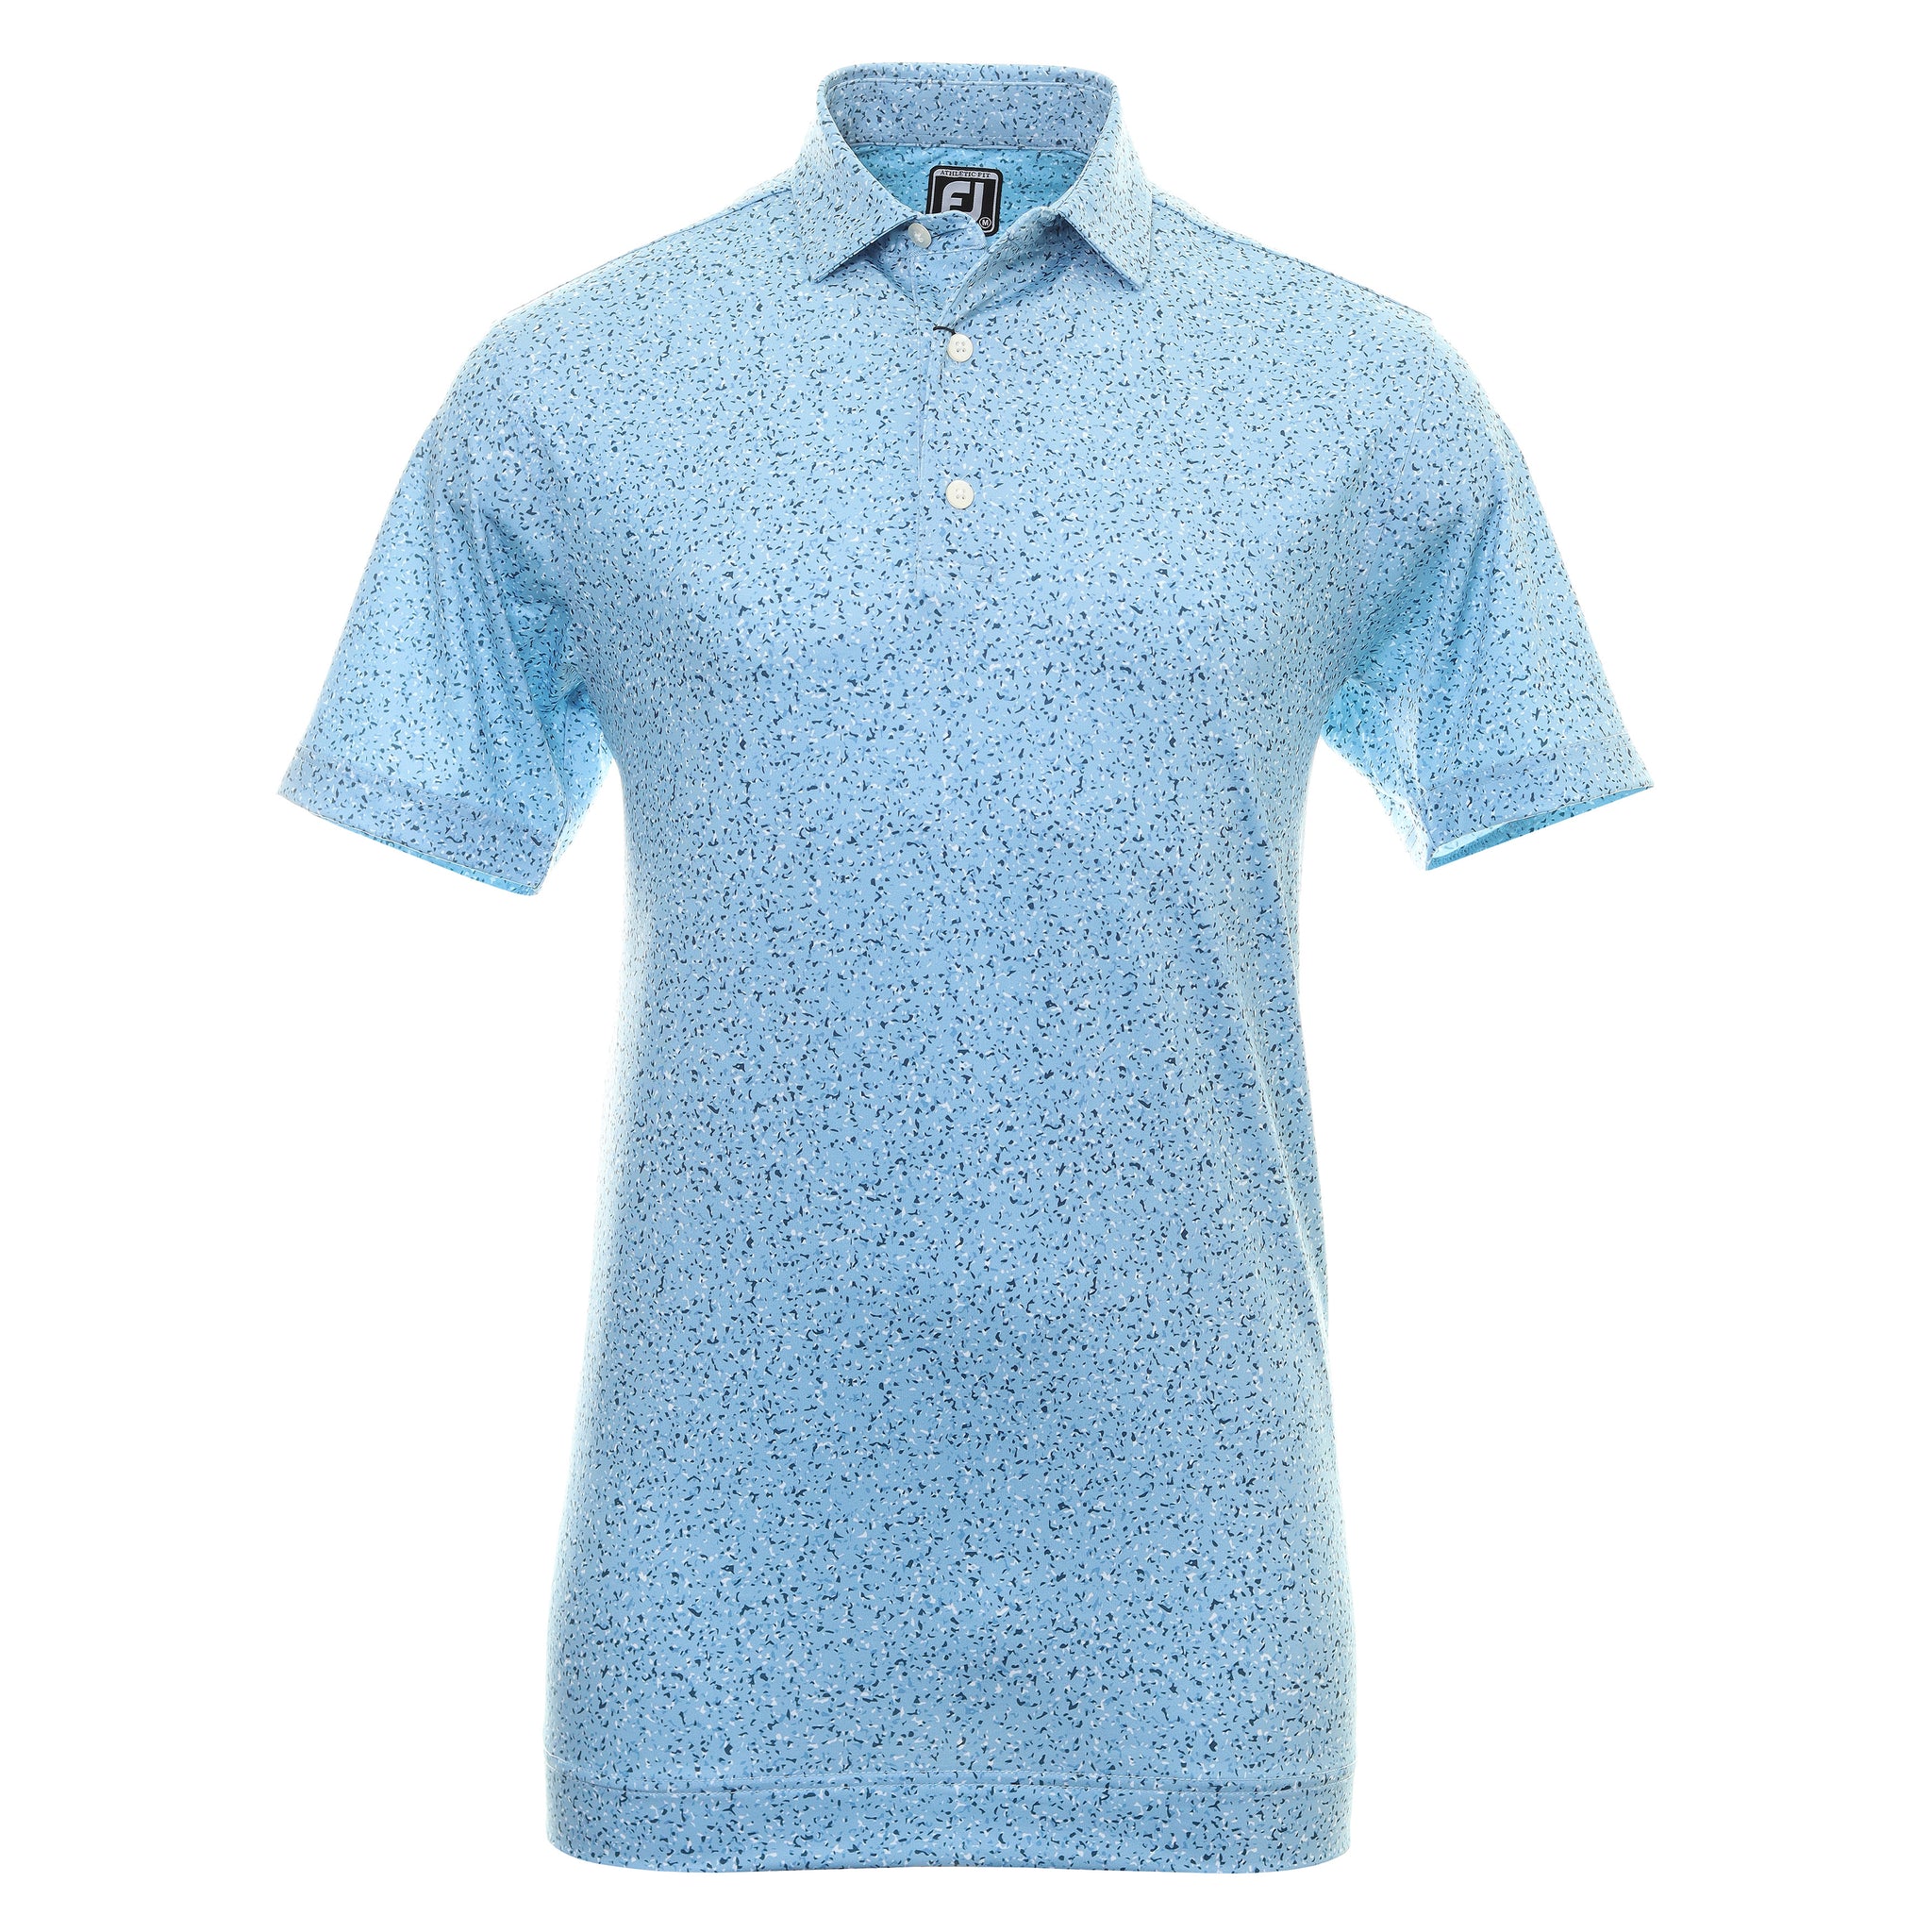 FootJoy Granite Print Golf Shirt 88417 Dusk Blue | Function18